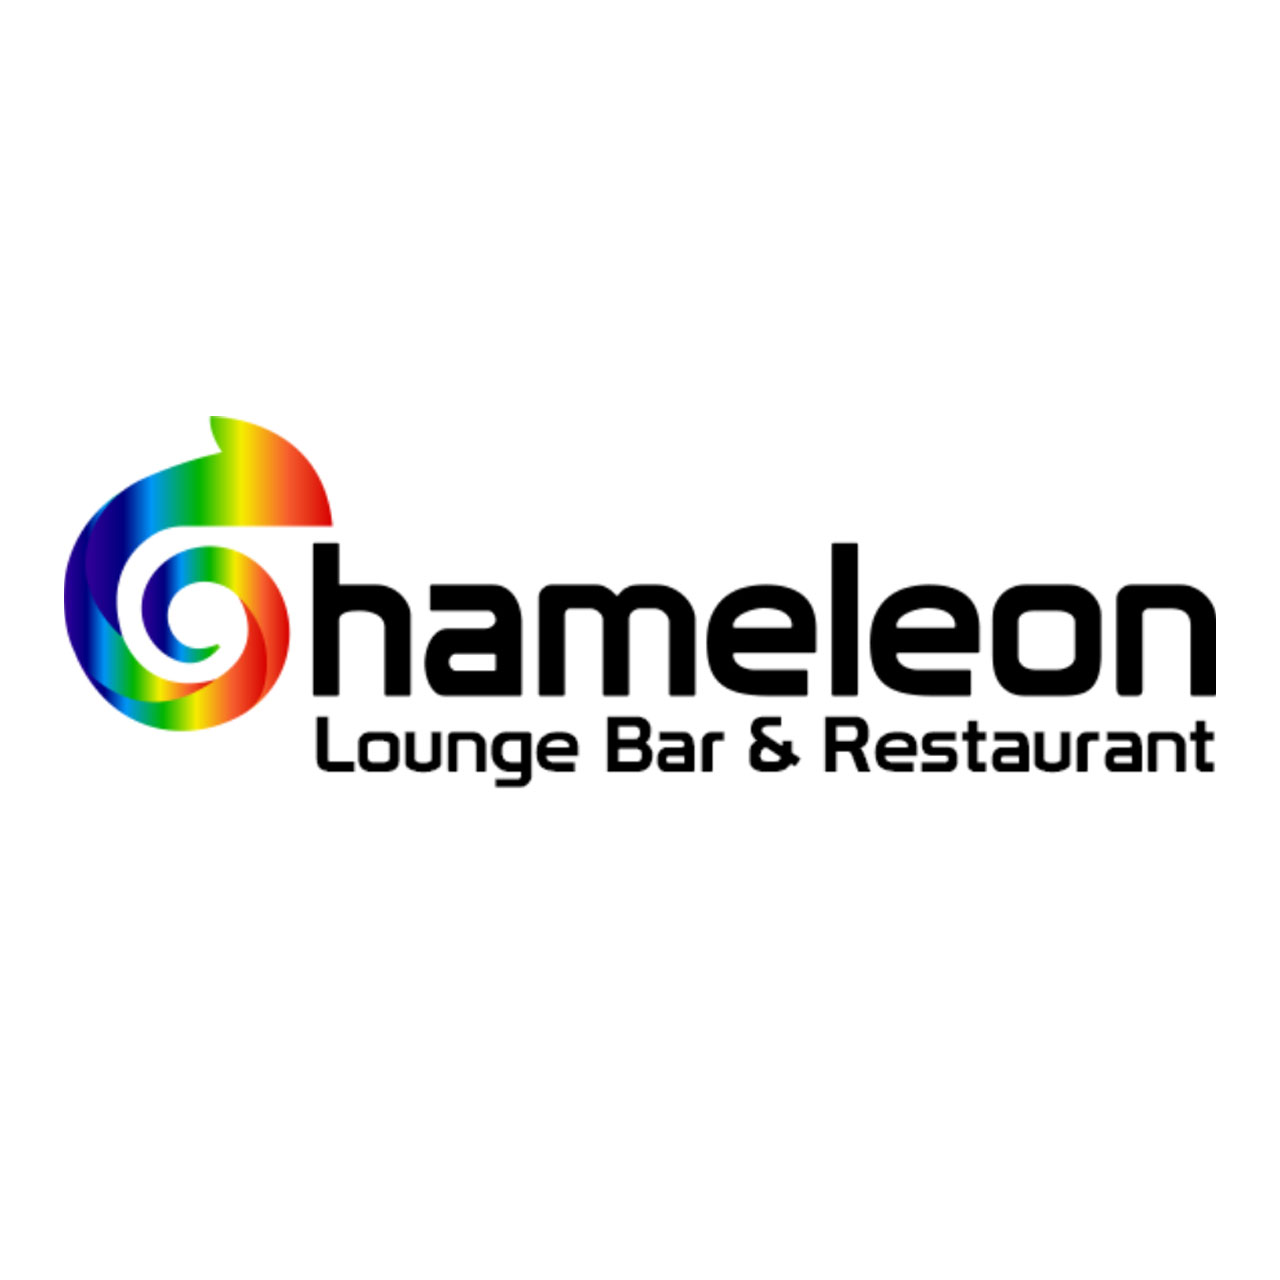 Chameleon Lounge and Bar